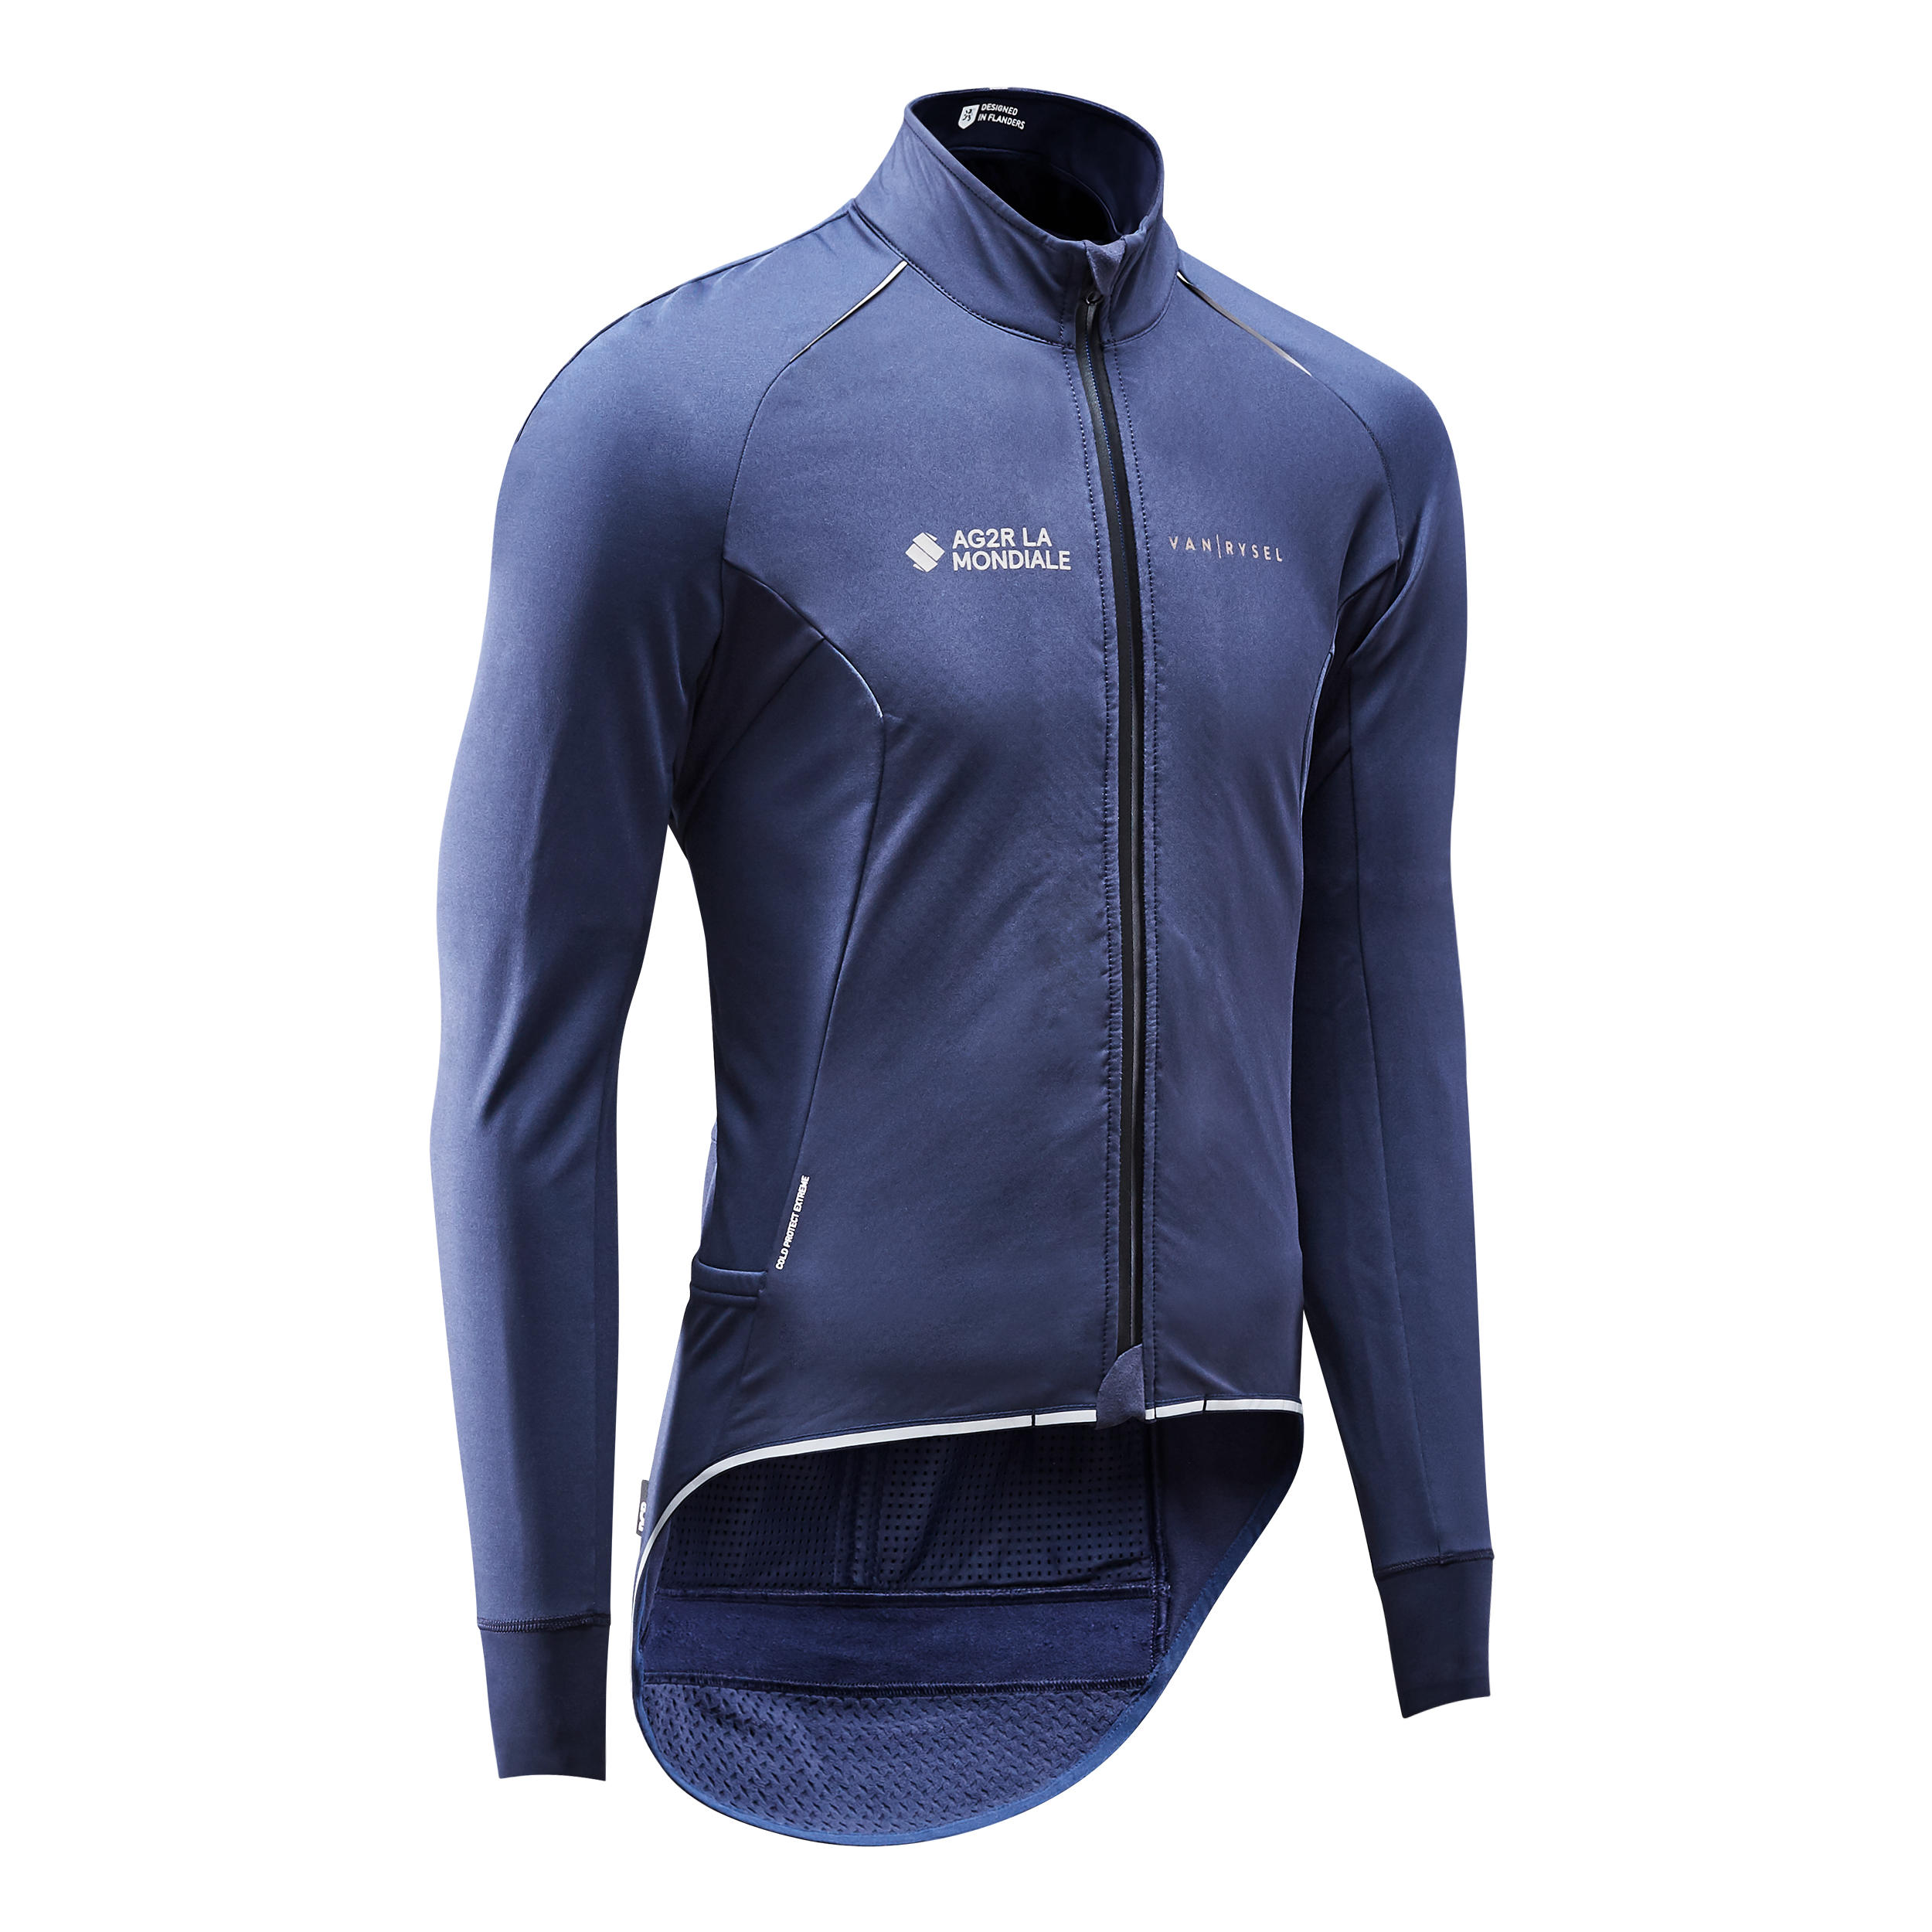 VAN RYSEL Men's Long-Sleeved Road Cycling Winter Jacket Racer Extreme - Navy Blue